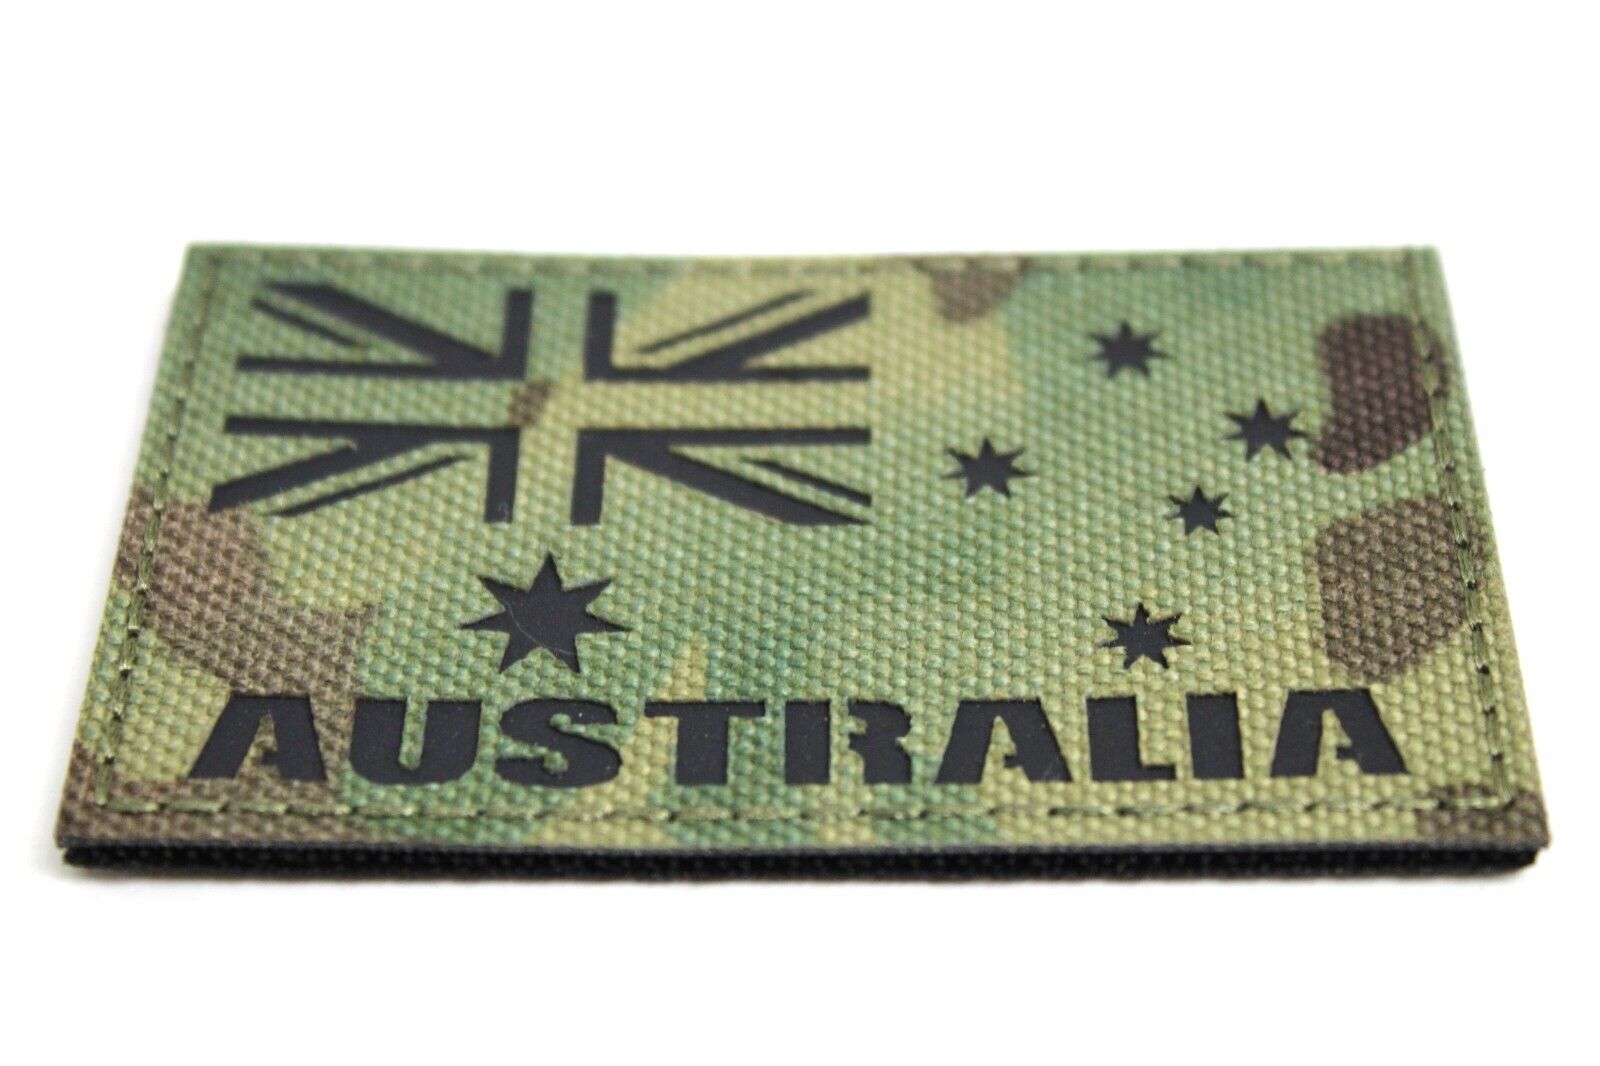 Australia MULTICAM Patch MTP Army Military Uniform Insignia Latest Issue